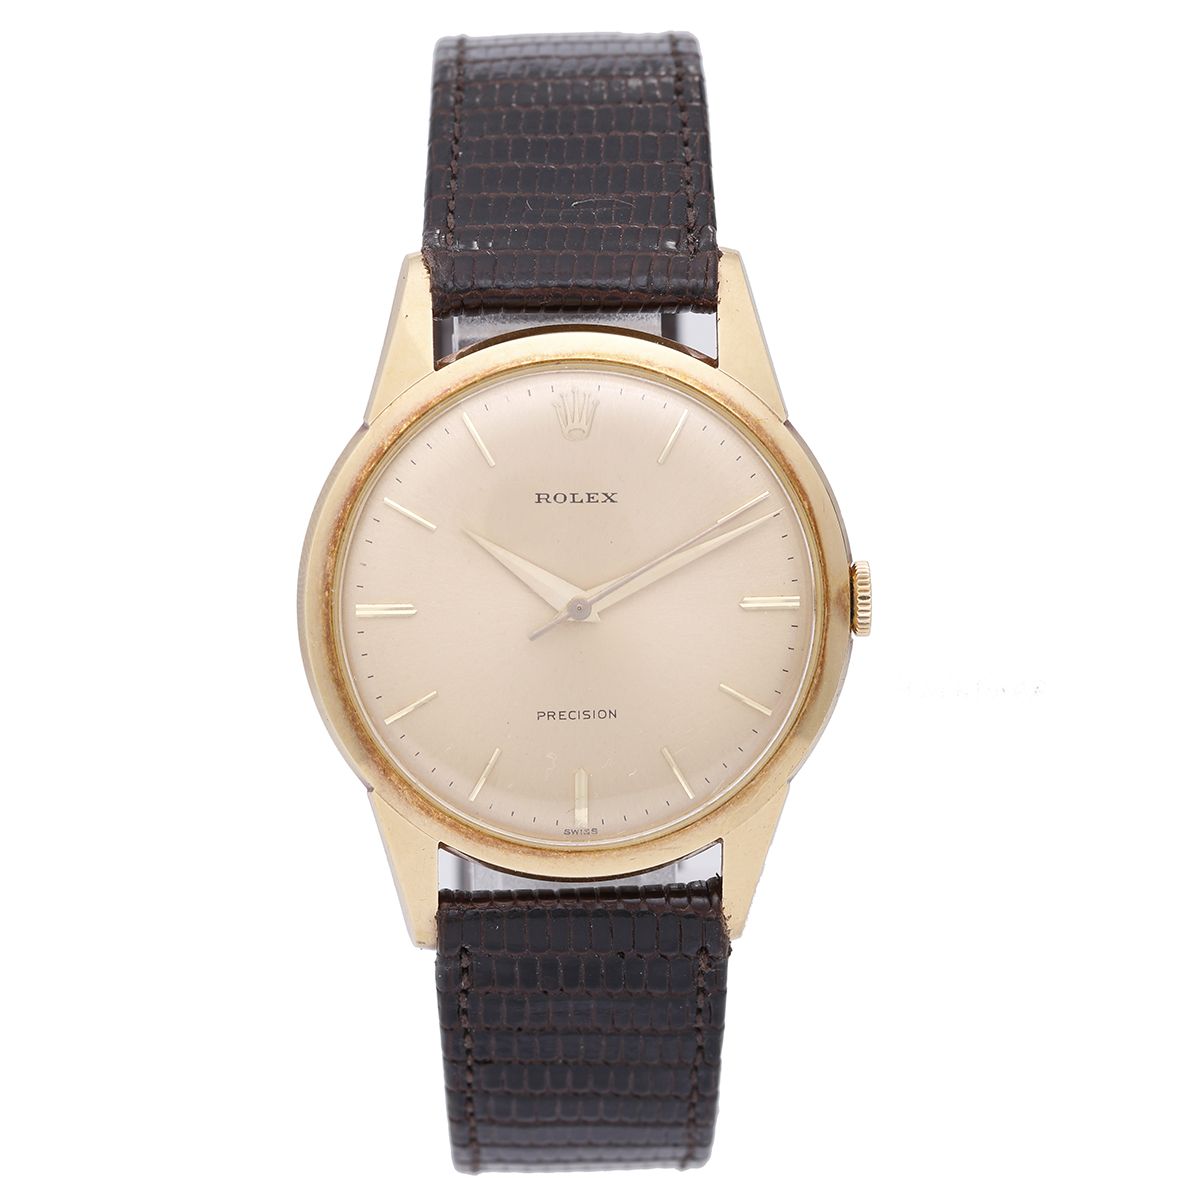 Vintage Rolex Precision 18k Yellow Gold Men's Watch